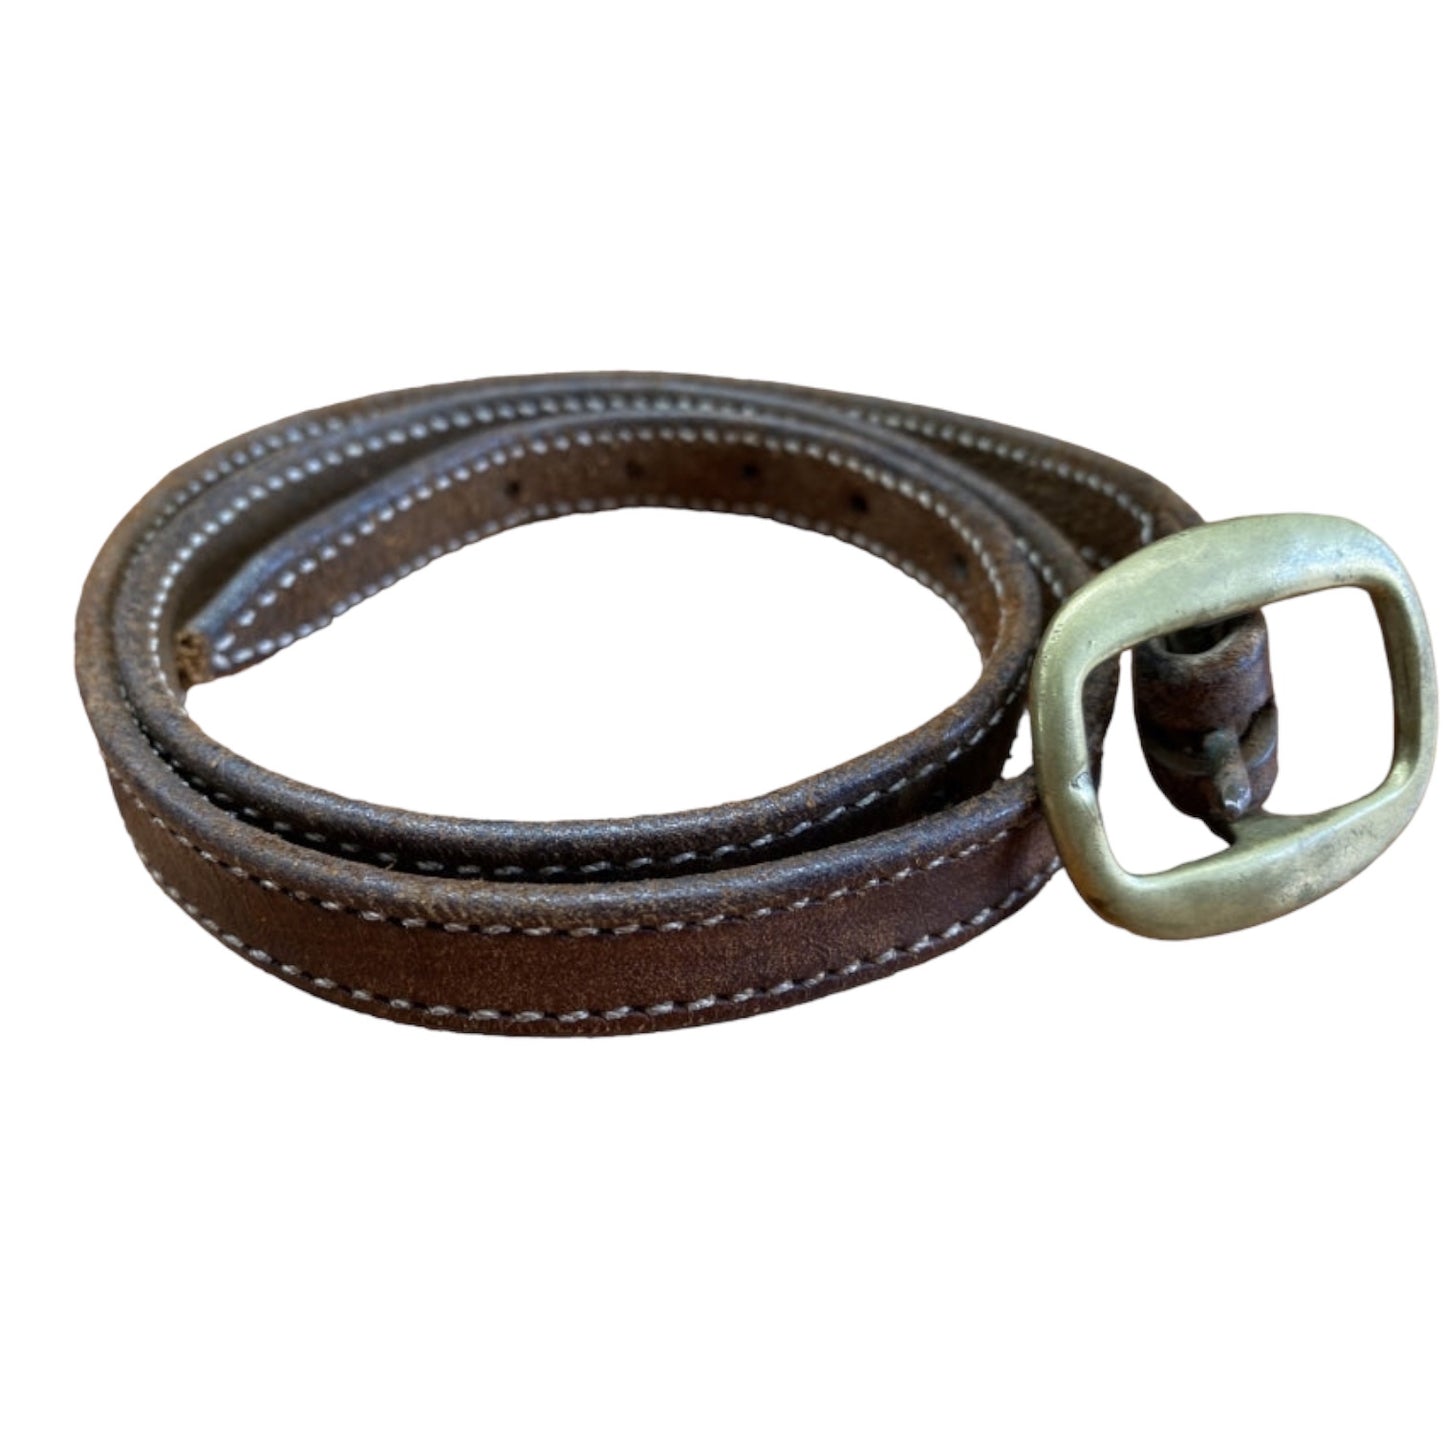 Leather Belt CHILDS 32"/81cm Tan (240430)